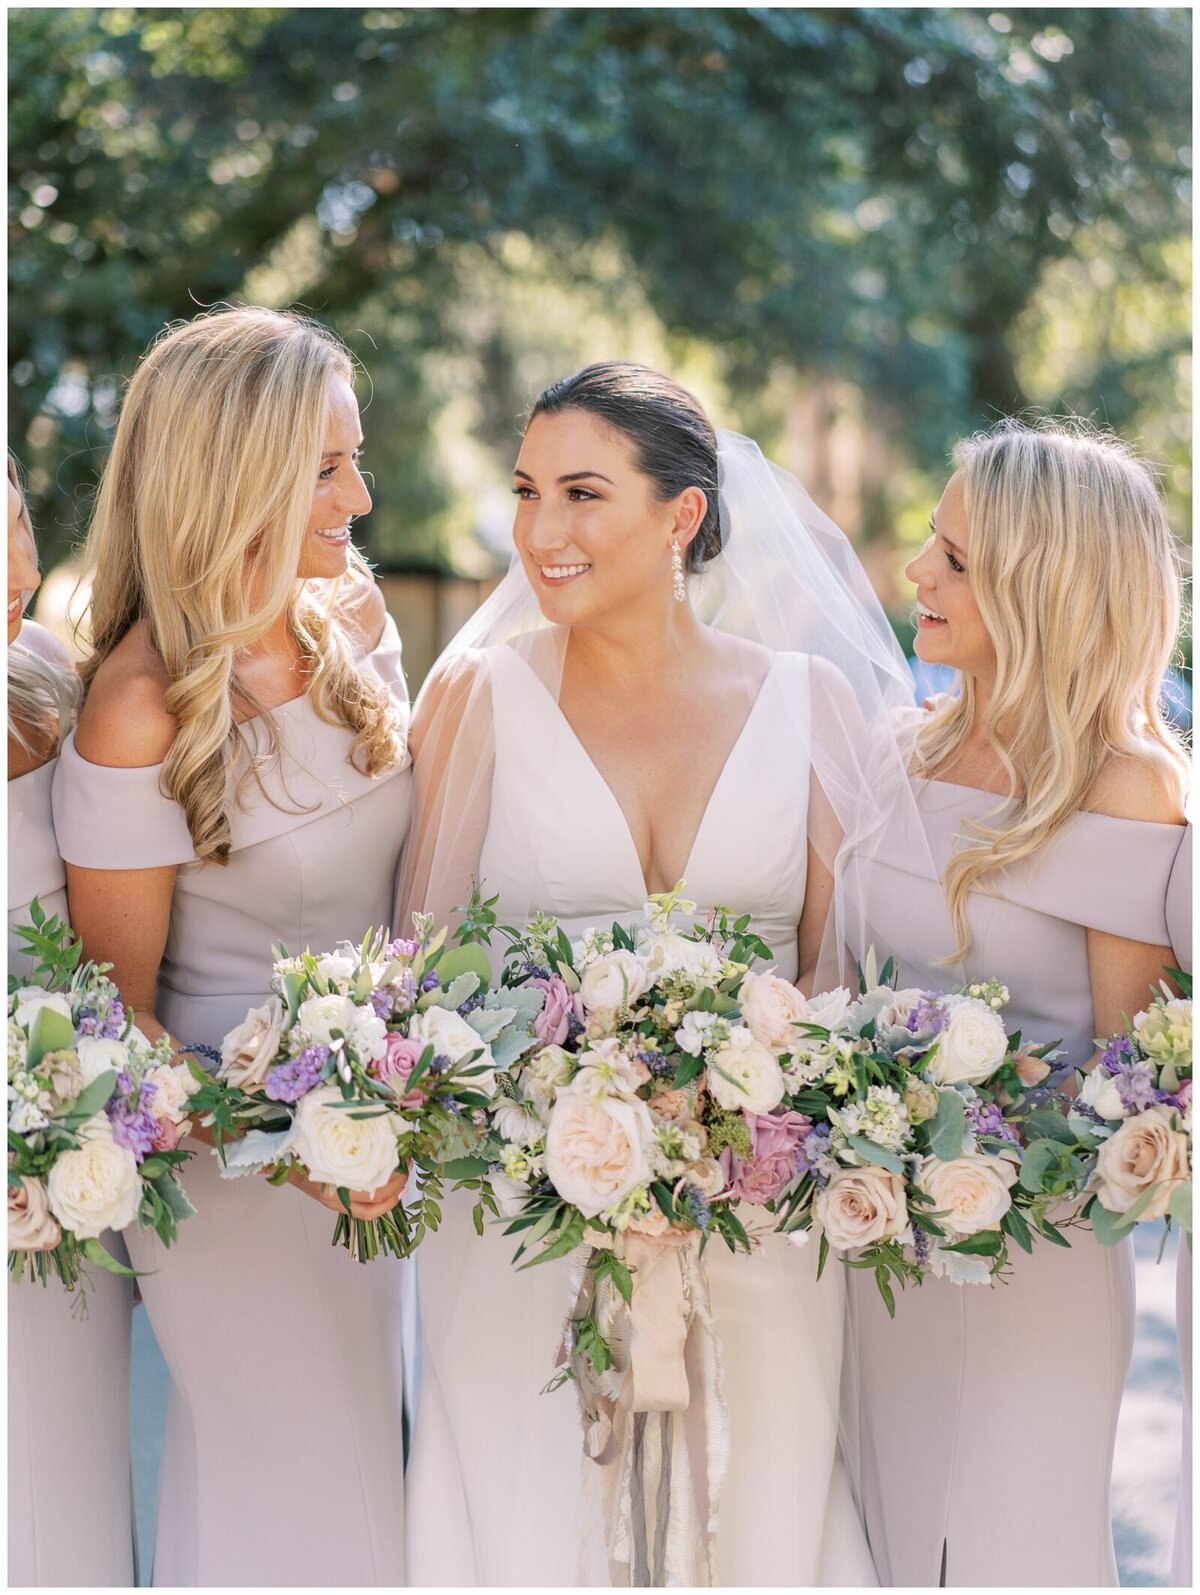 Kelsey-Alex-Sonoma-Buena-Vista-Winery-Wedding-Cassie-Valente-Photography-0258